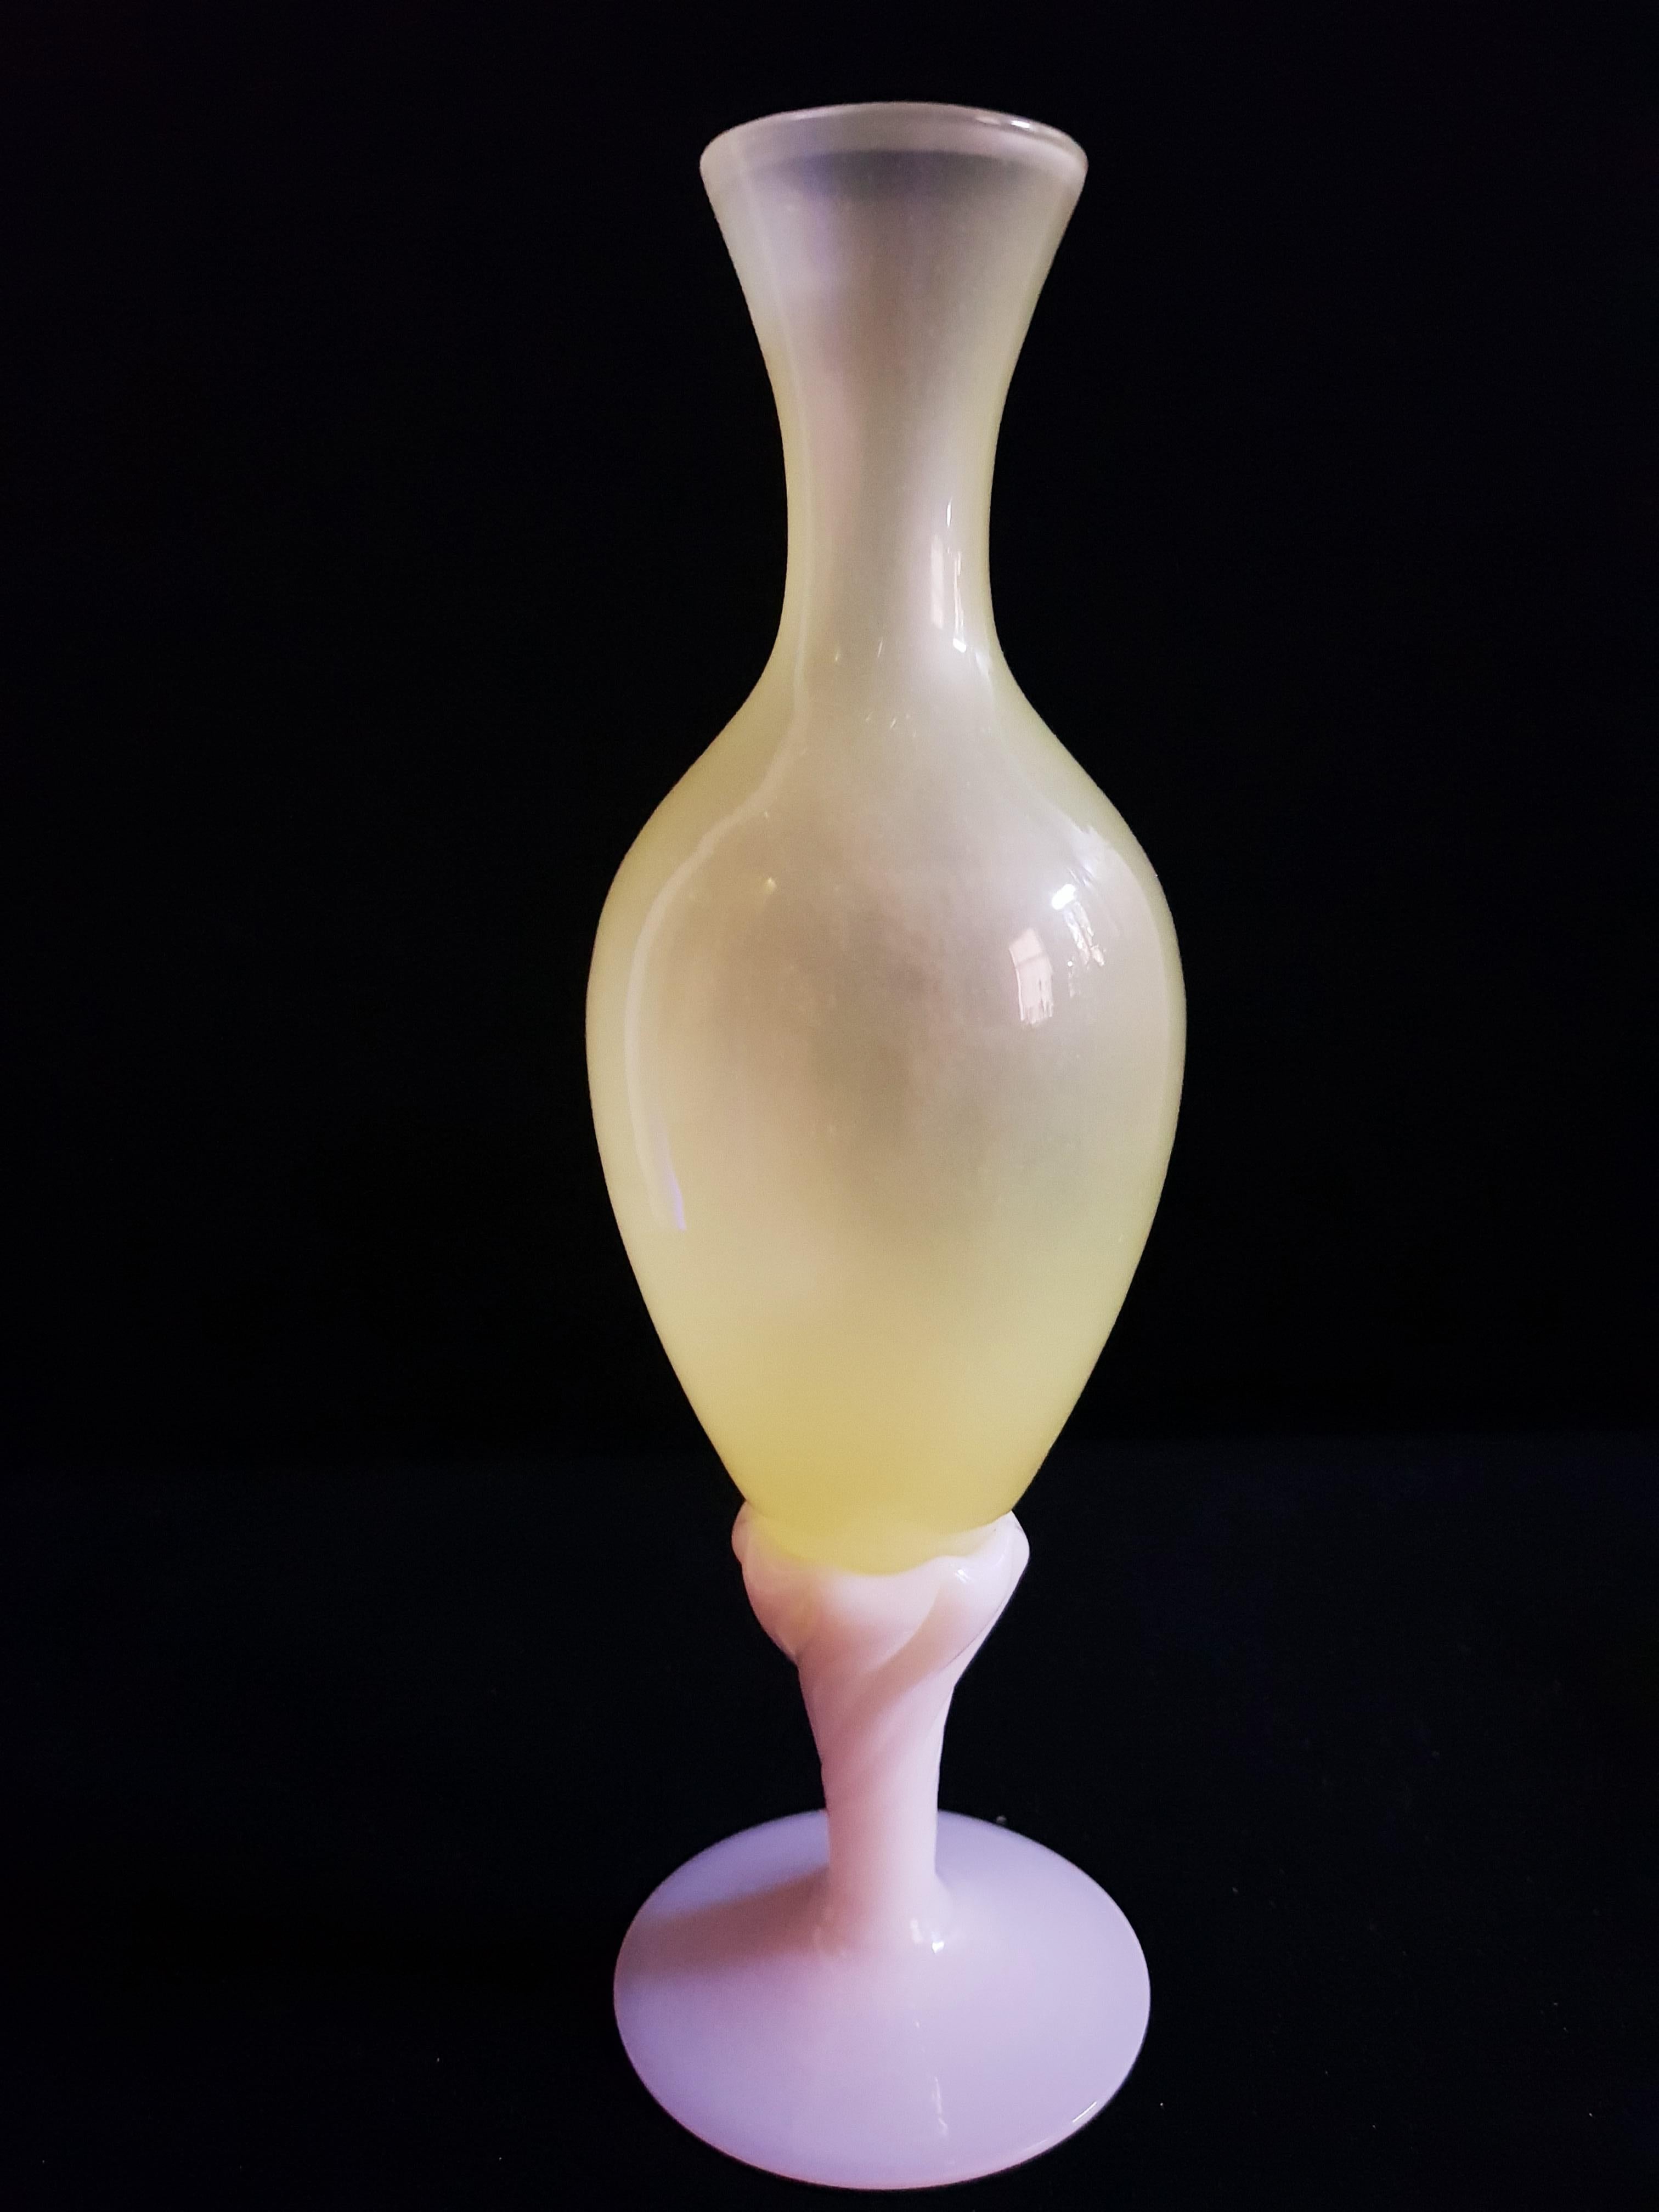 Beautiful vitange Empoli uranium opaline vase, yellow green and white opal glass brilliant condition.